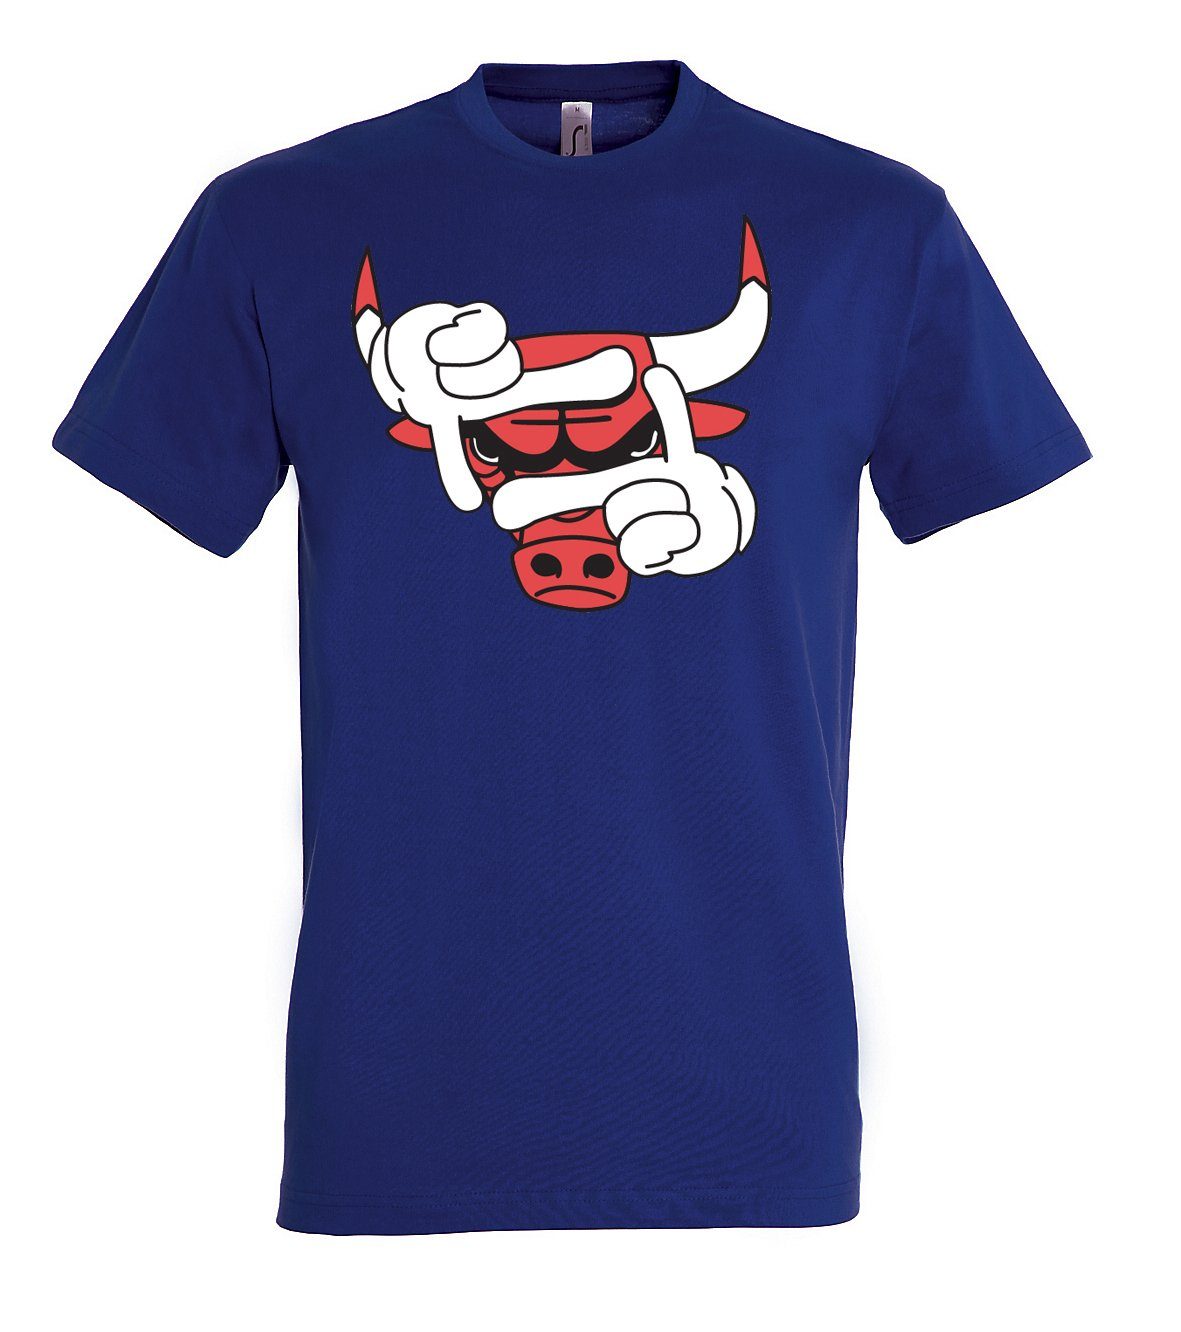 Sport Herren mit Frontprint T-Shirt Designz Navyblau modischem T-Shirt Bulls Youth